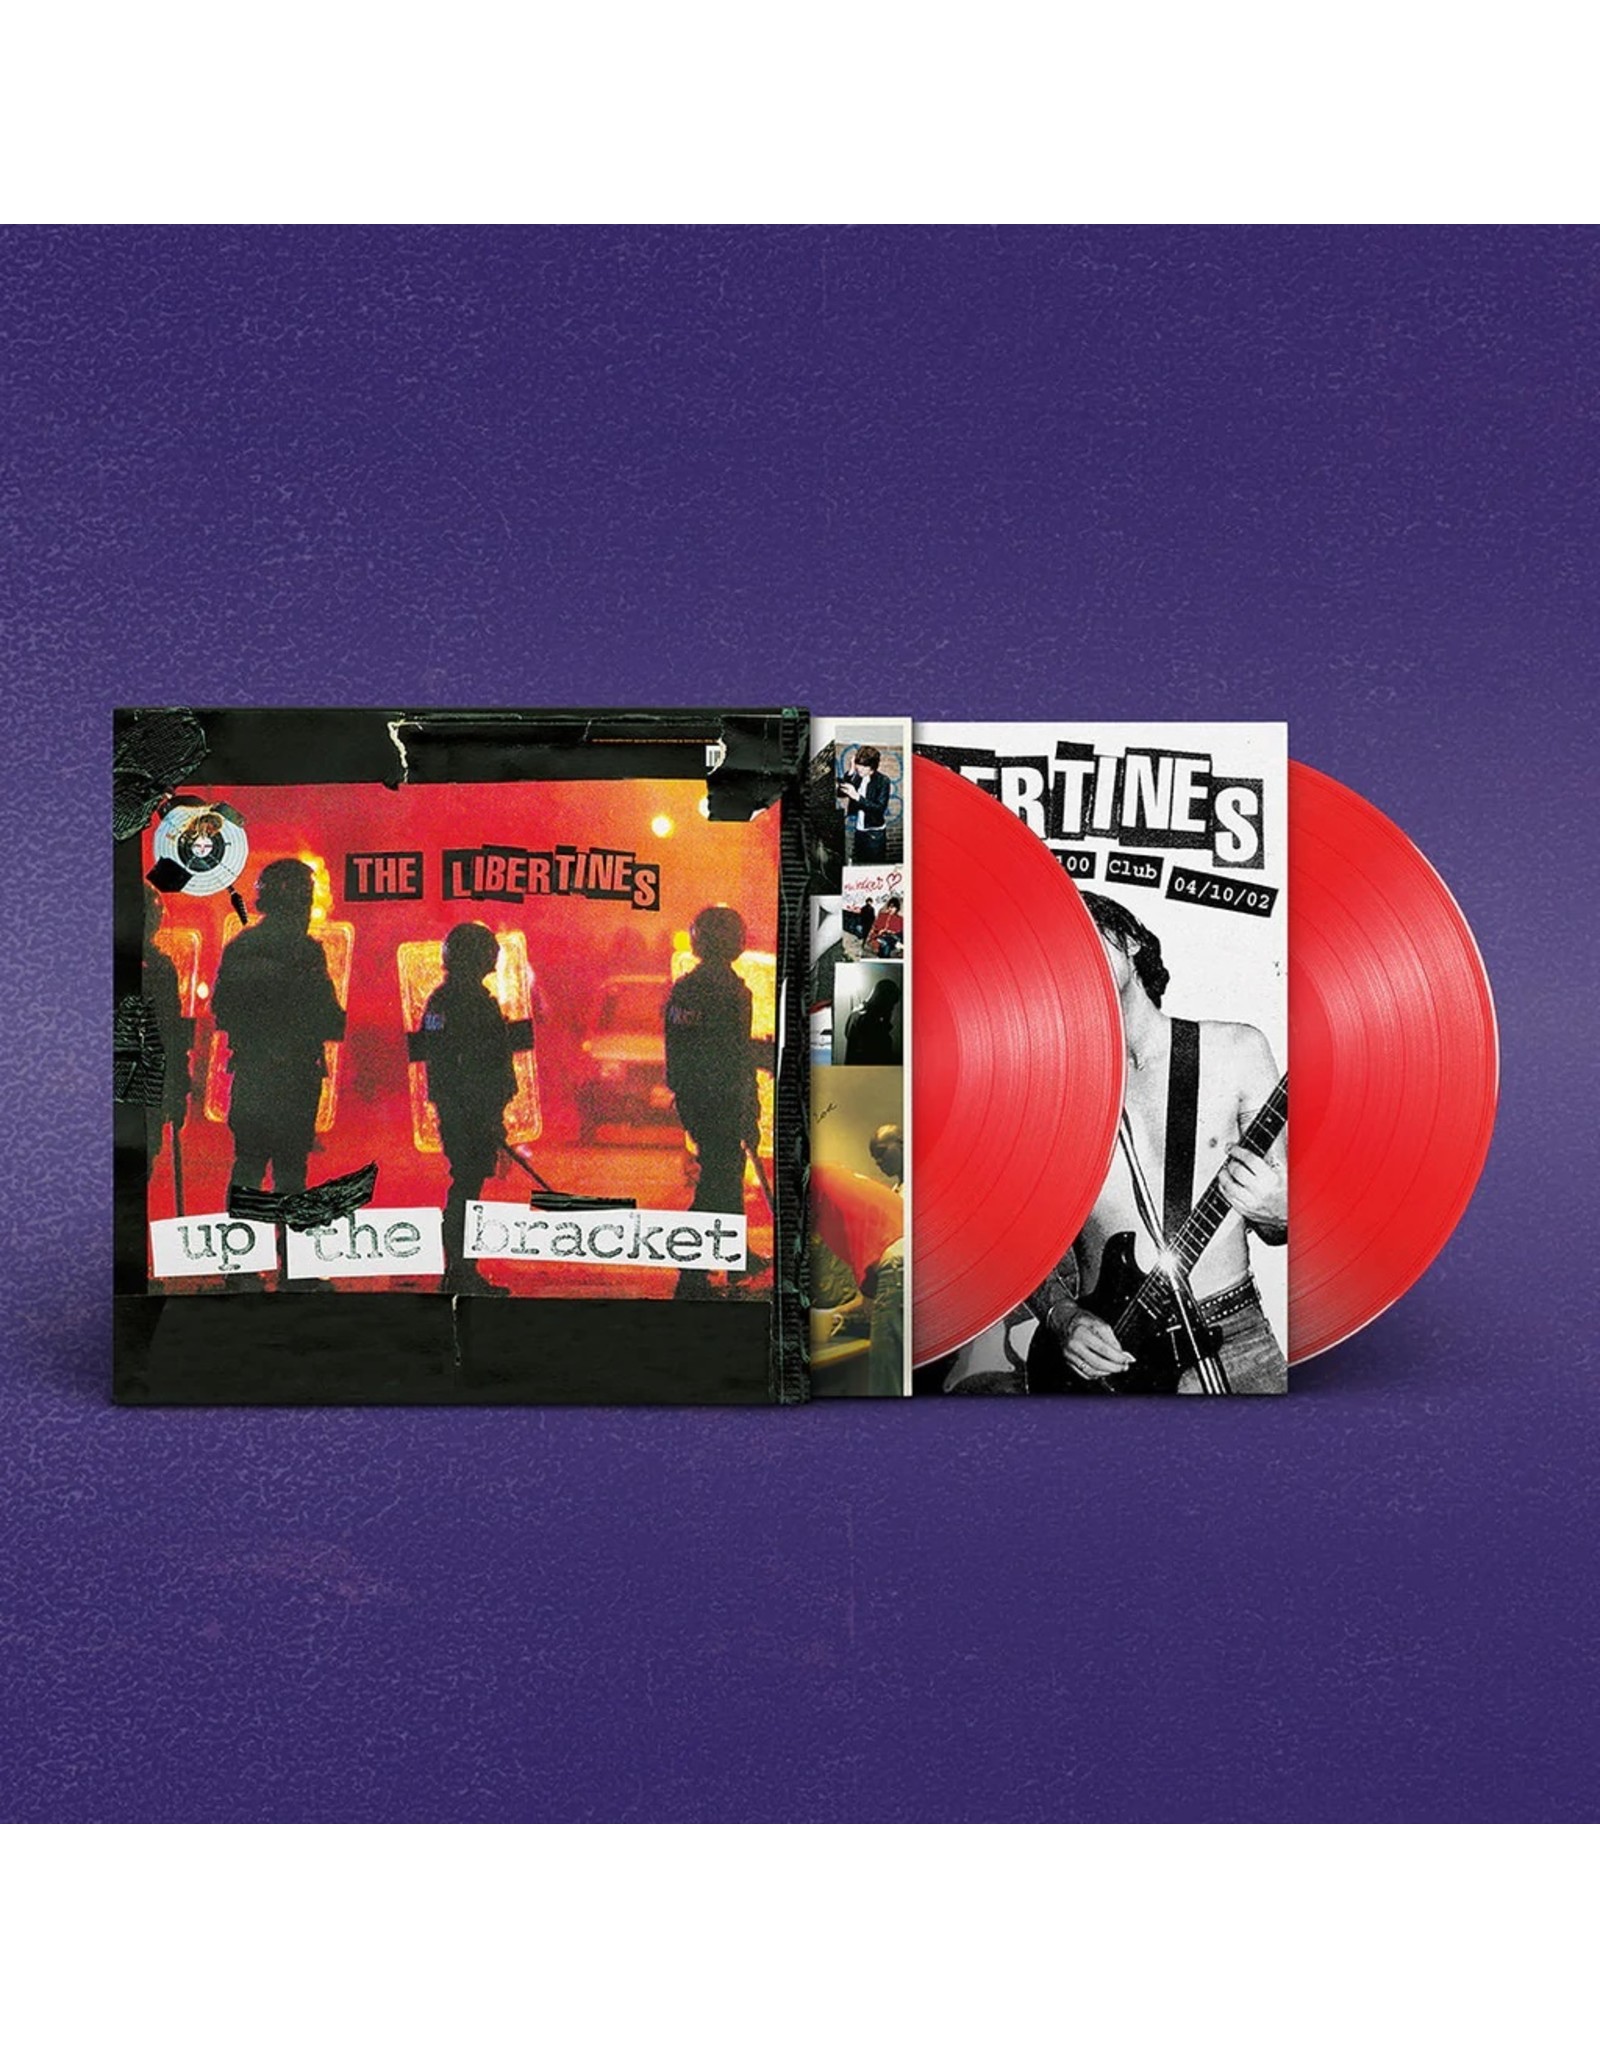 Libertines - Up The Bracket (20th Anniversary) [Exclusive Red Vinyl]